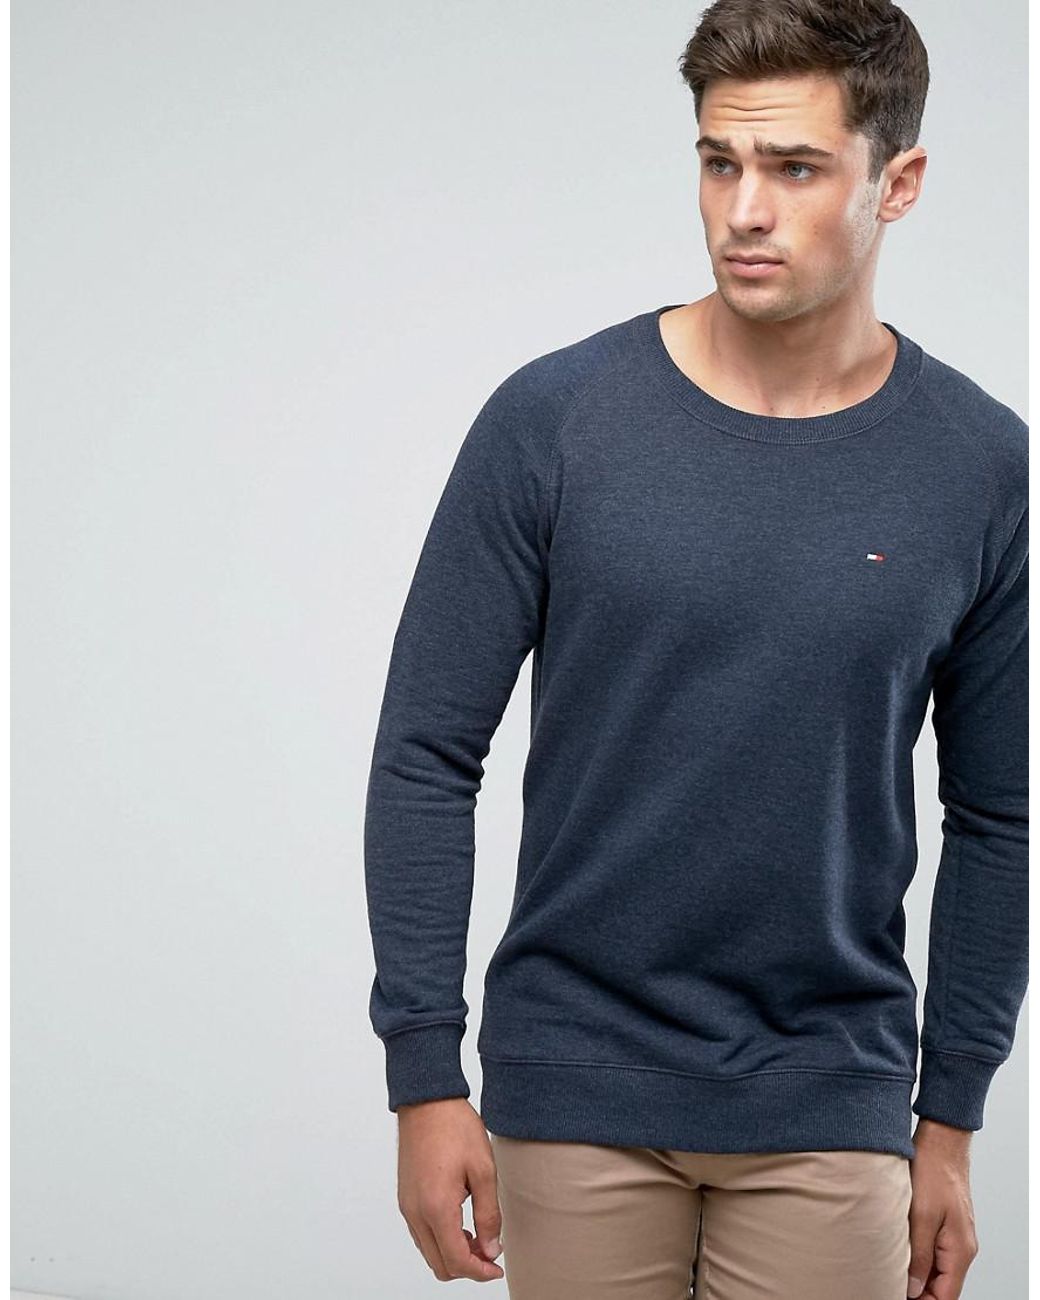 Lyst - Tommy Hilfiger Flag Logo Sweatshirt In Navy Marl in Blue for Men